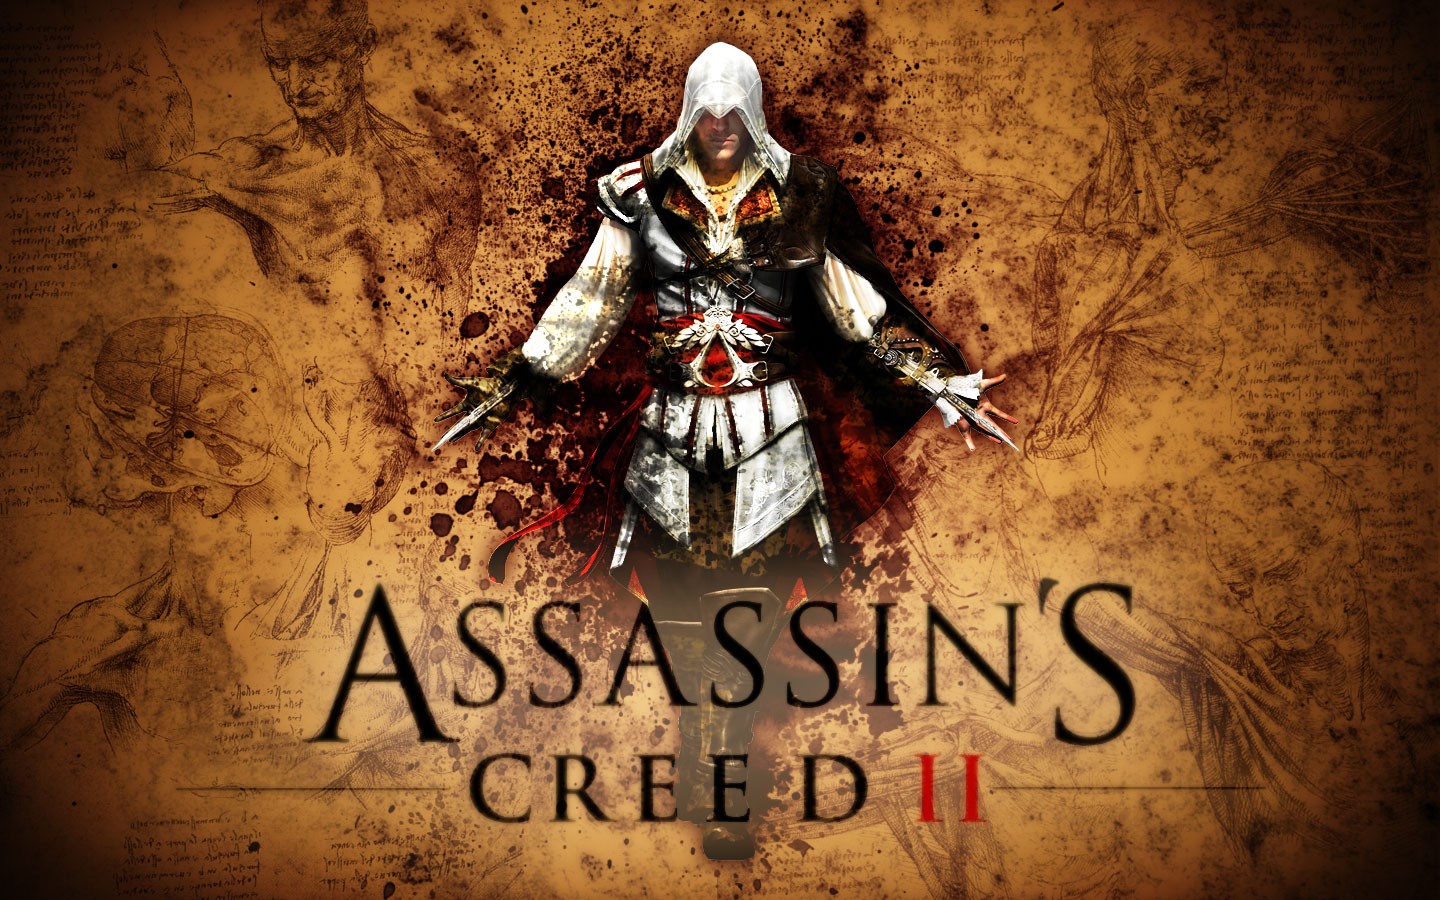 Assassins Creed II, Ezio Auditore Da Firenze, Video Games Wallpaper